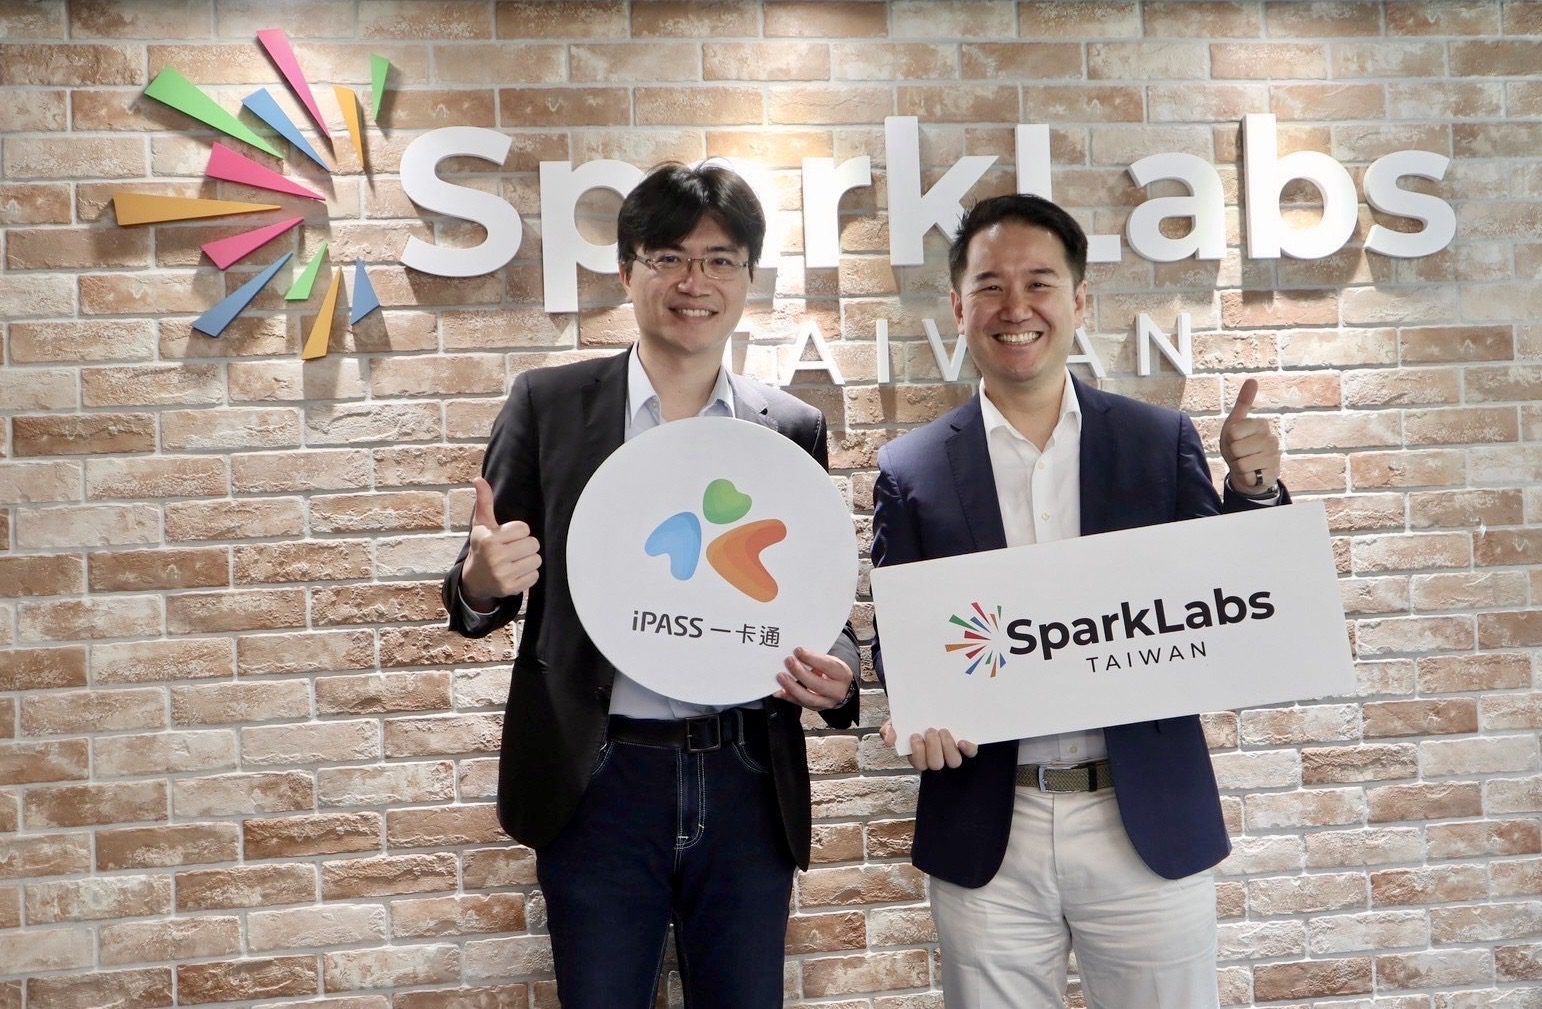 iPASS一卡通攜手SparkLabs Taiwan 　偕同推動金融科技 完成金融服務新藍圖